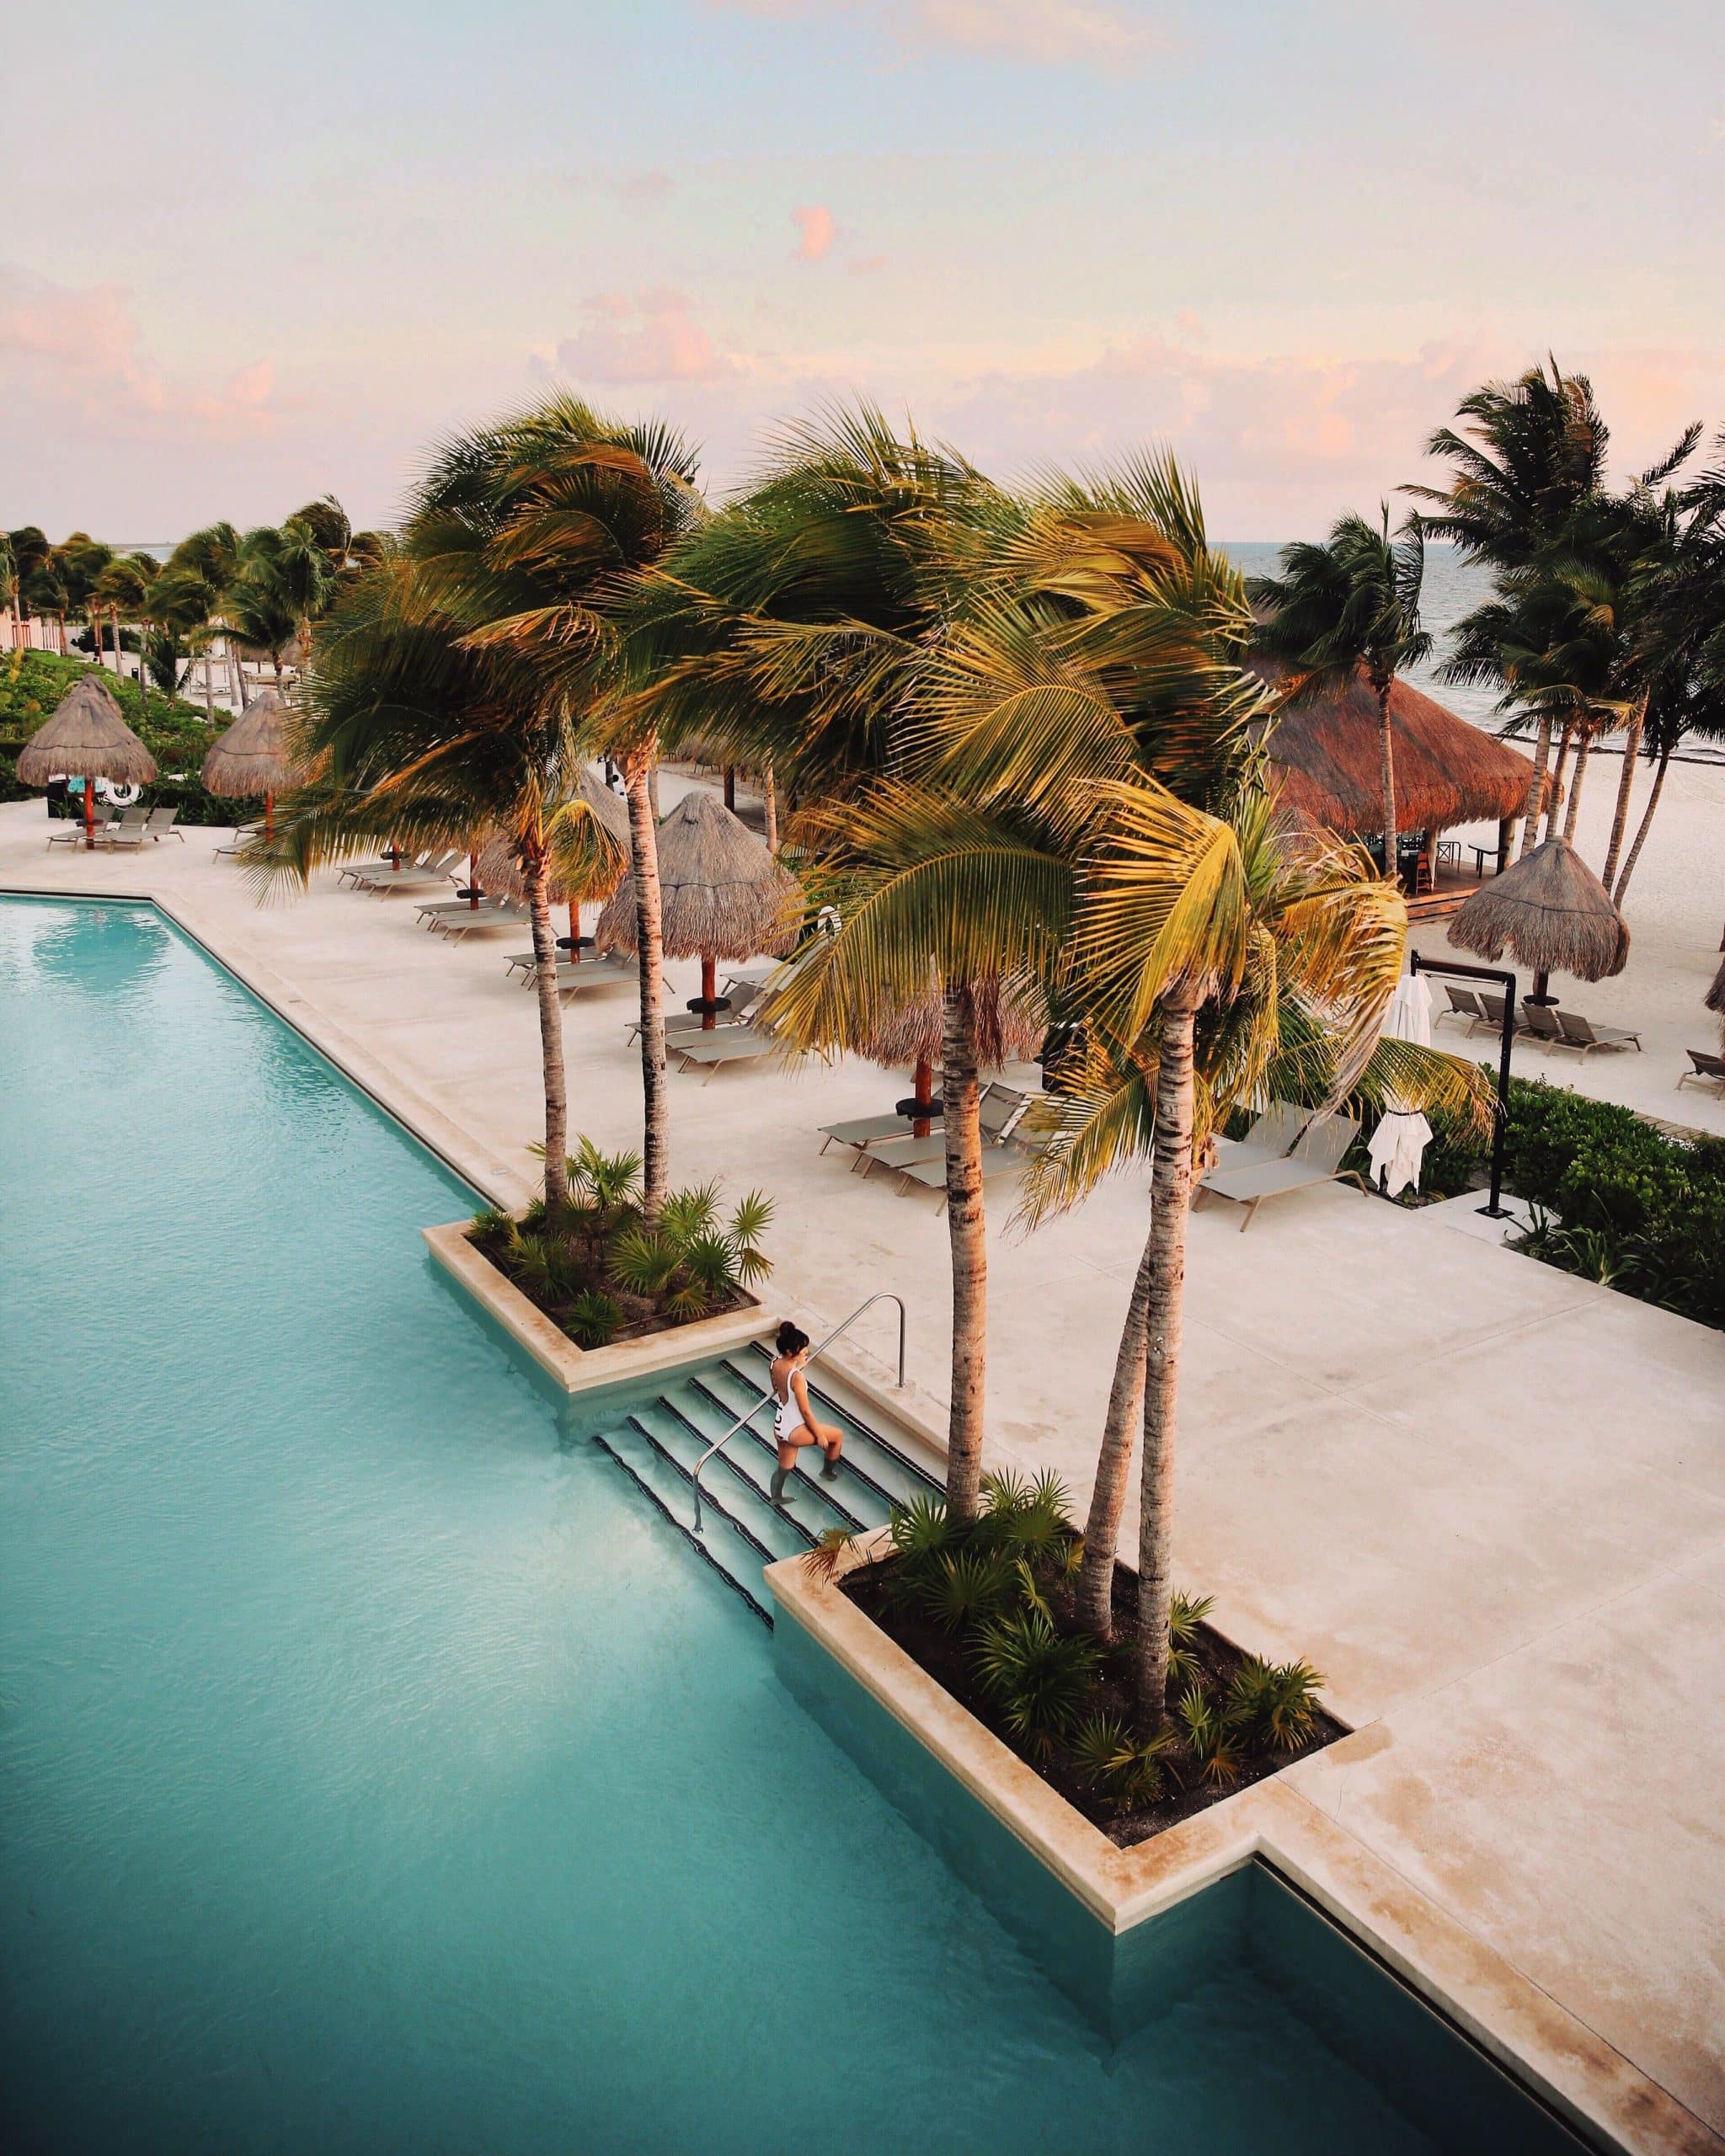 Discover Cancun all